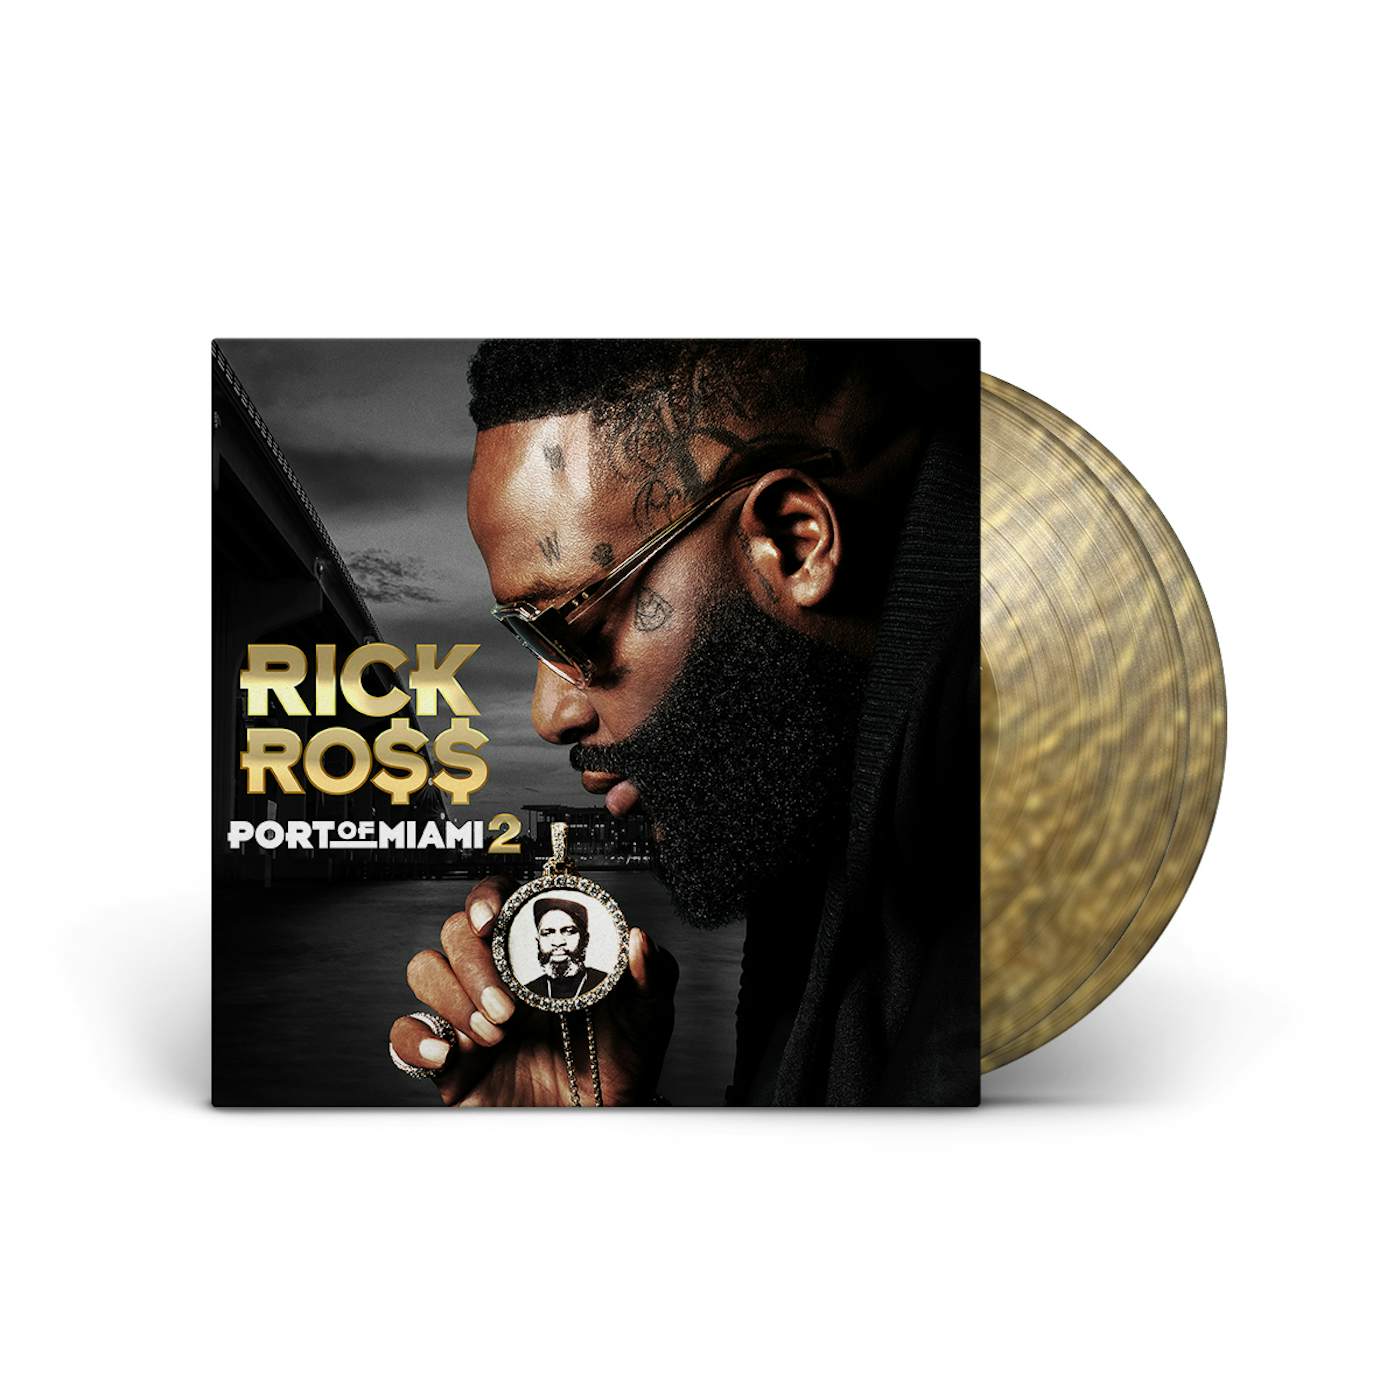 Rick Ross "Port of Miami 2" Translucent Gold Swirl Vinyl 2-LP